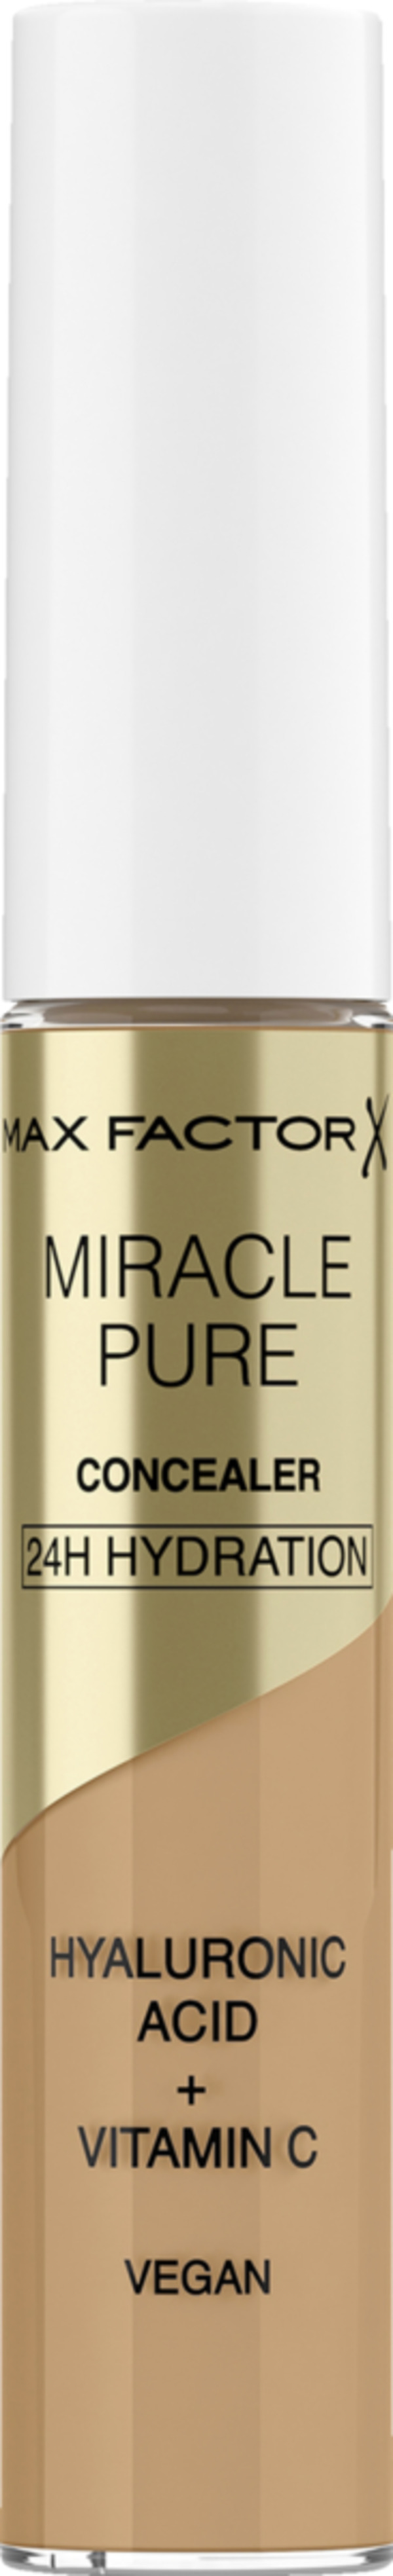 Bild 1 von Max Factor Miracle Pure Concealer, Fb. 05